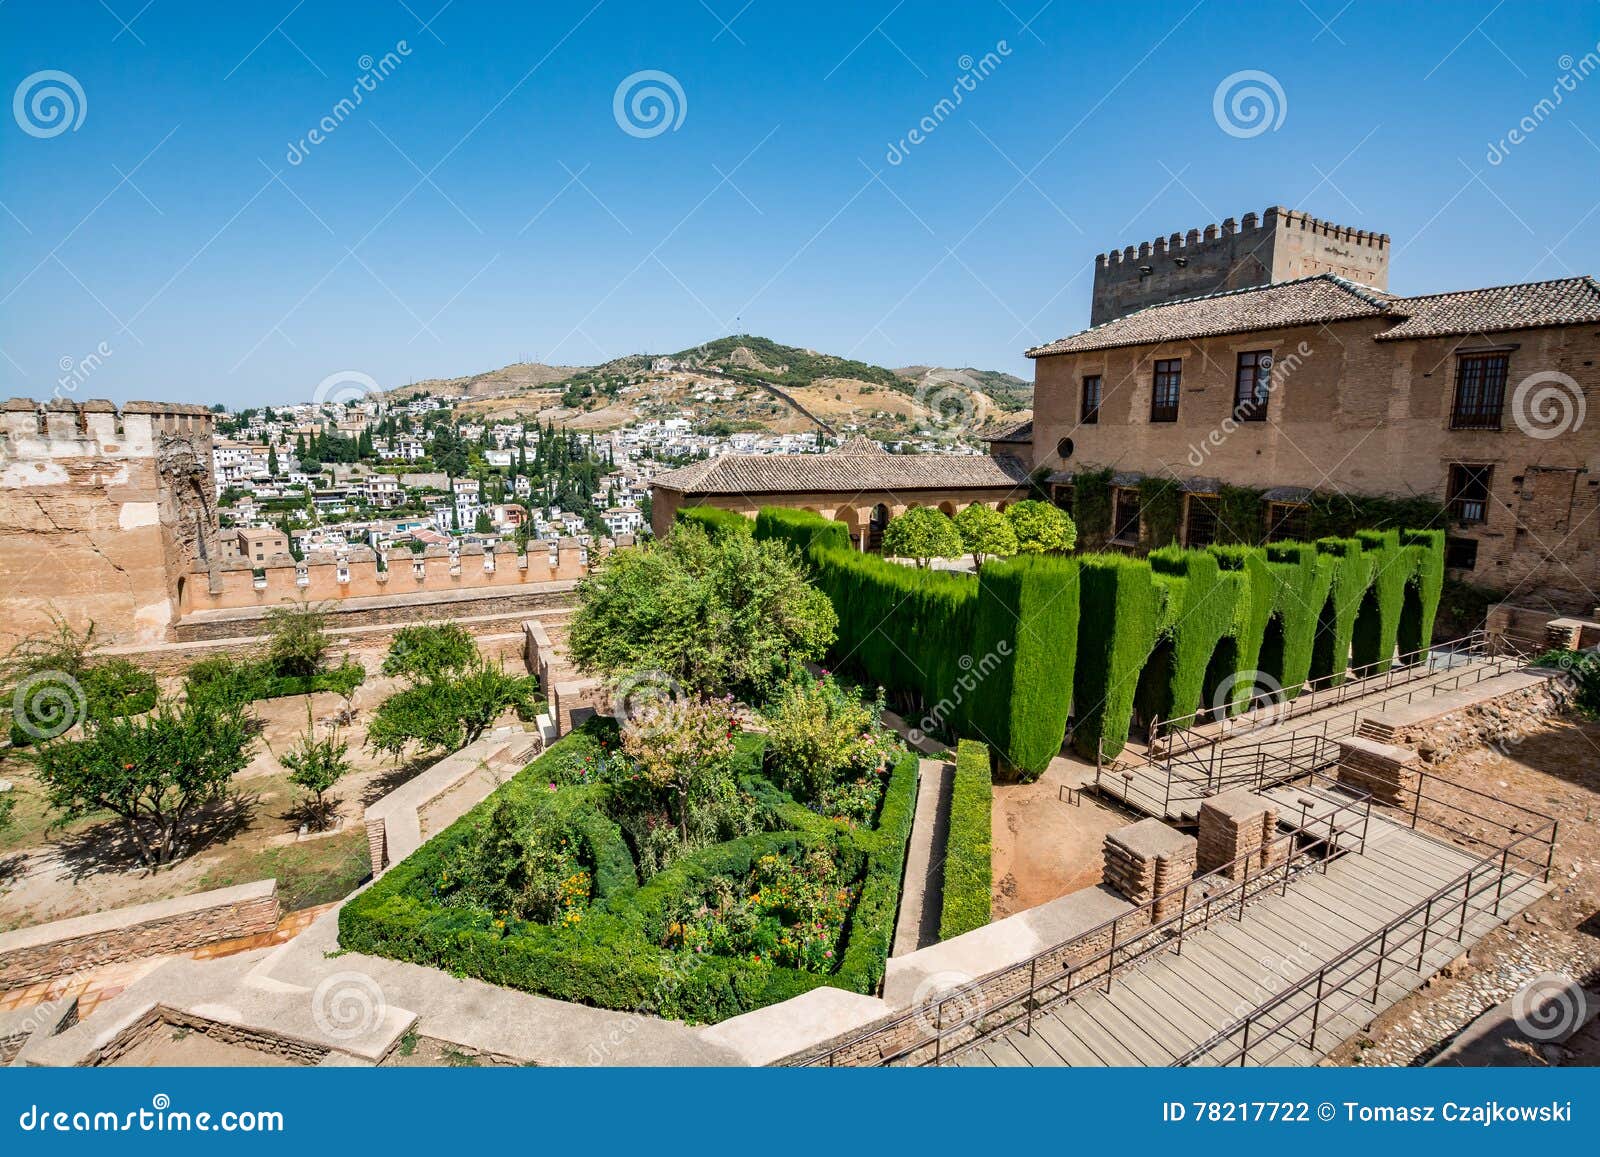 view of the nasrid palaces palacios nazarÃÂ­es and gardens in front of them in alhambra